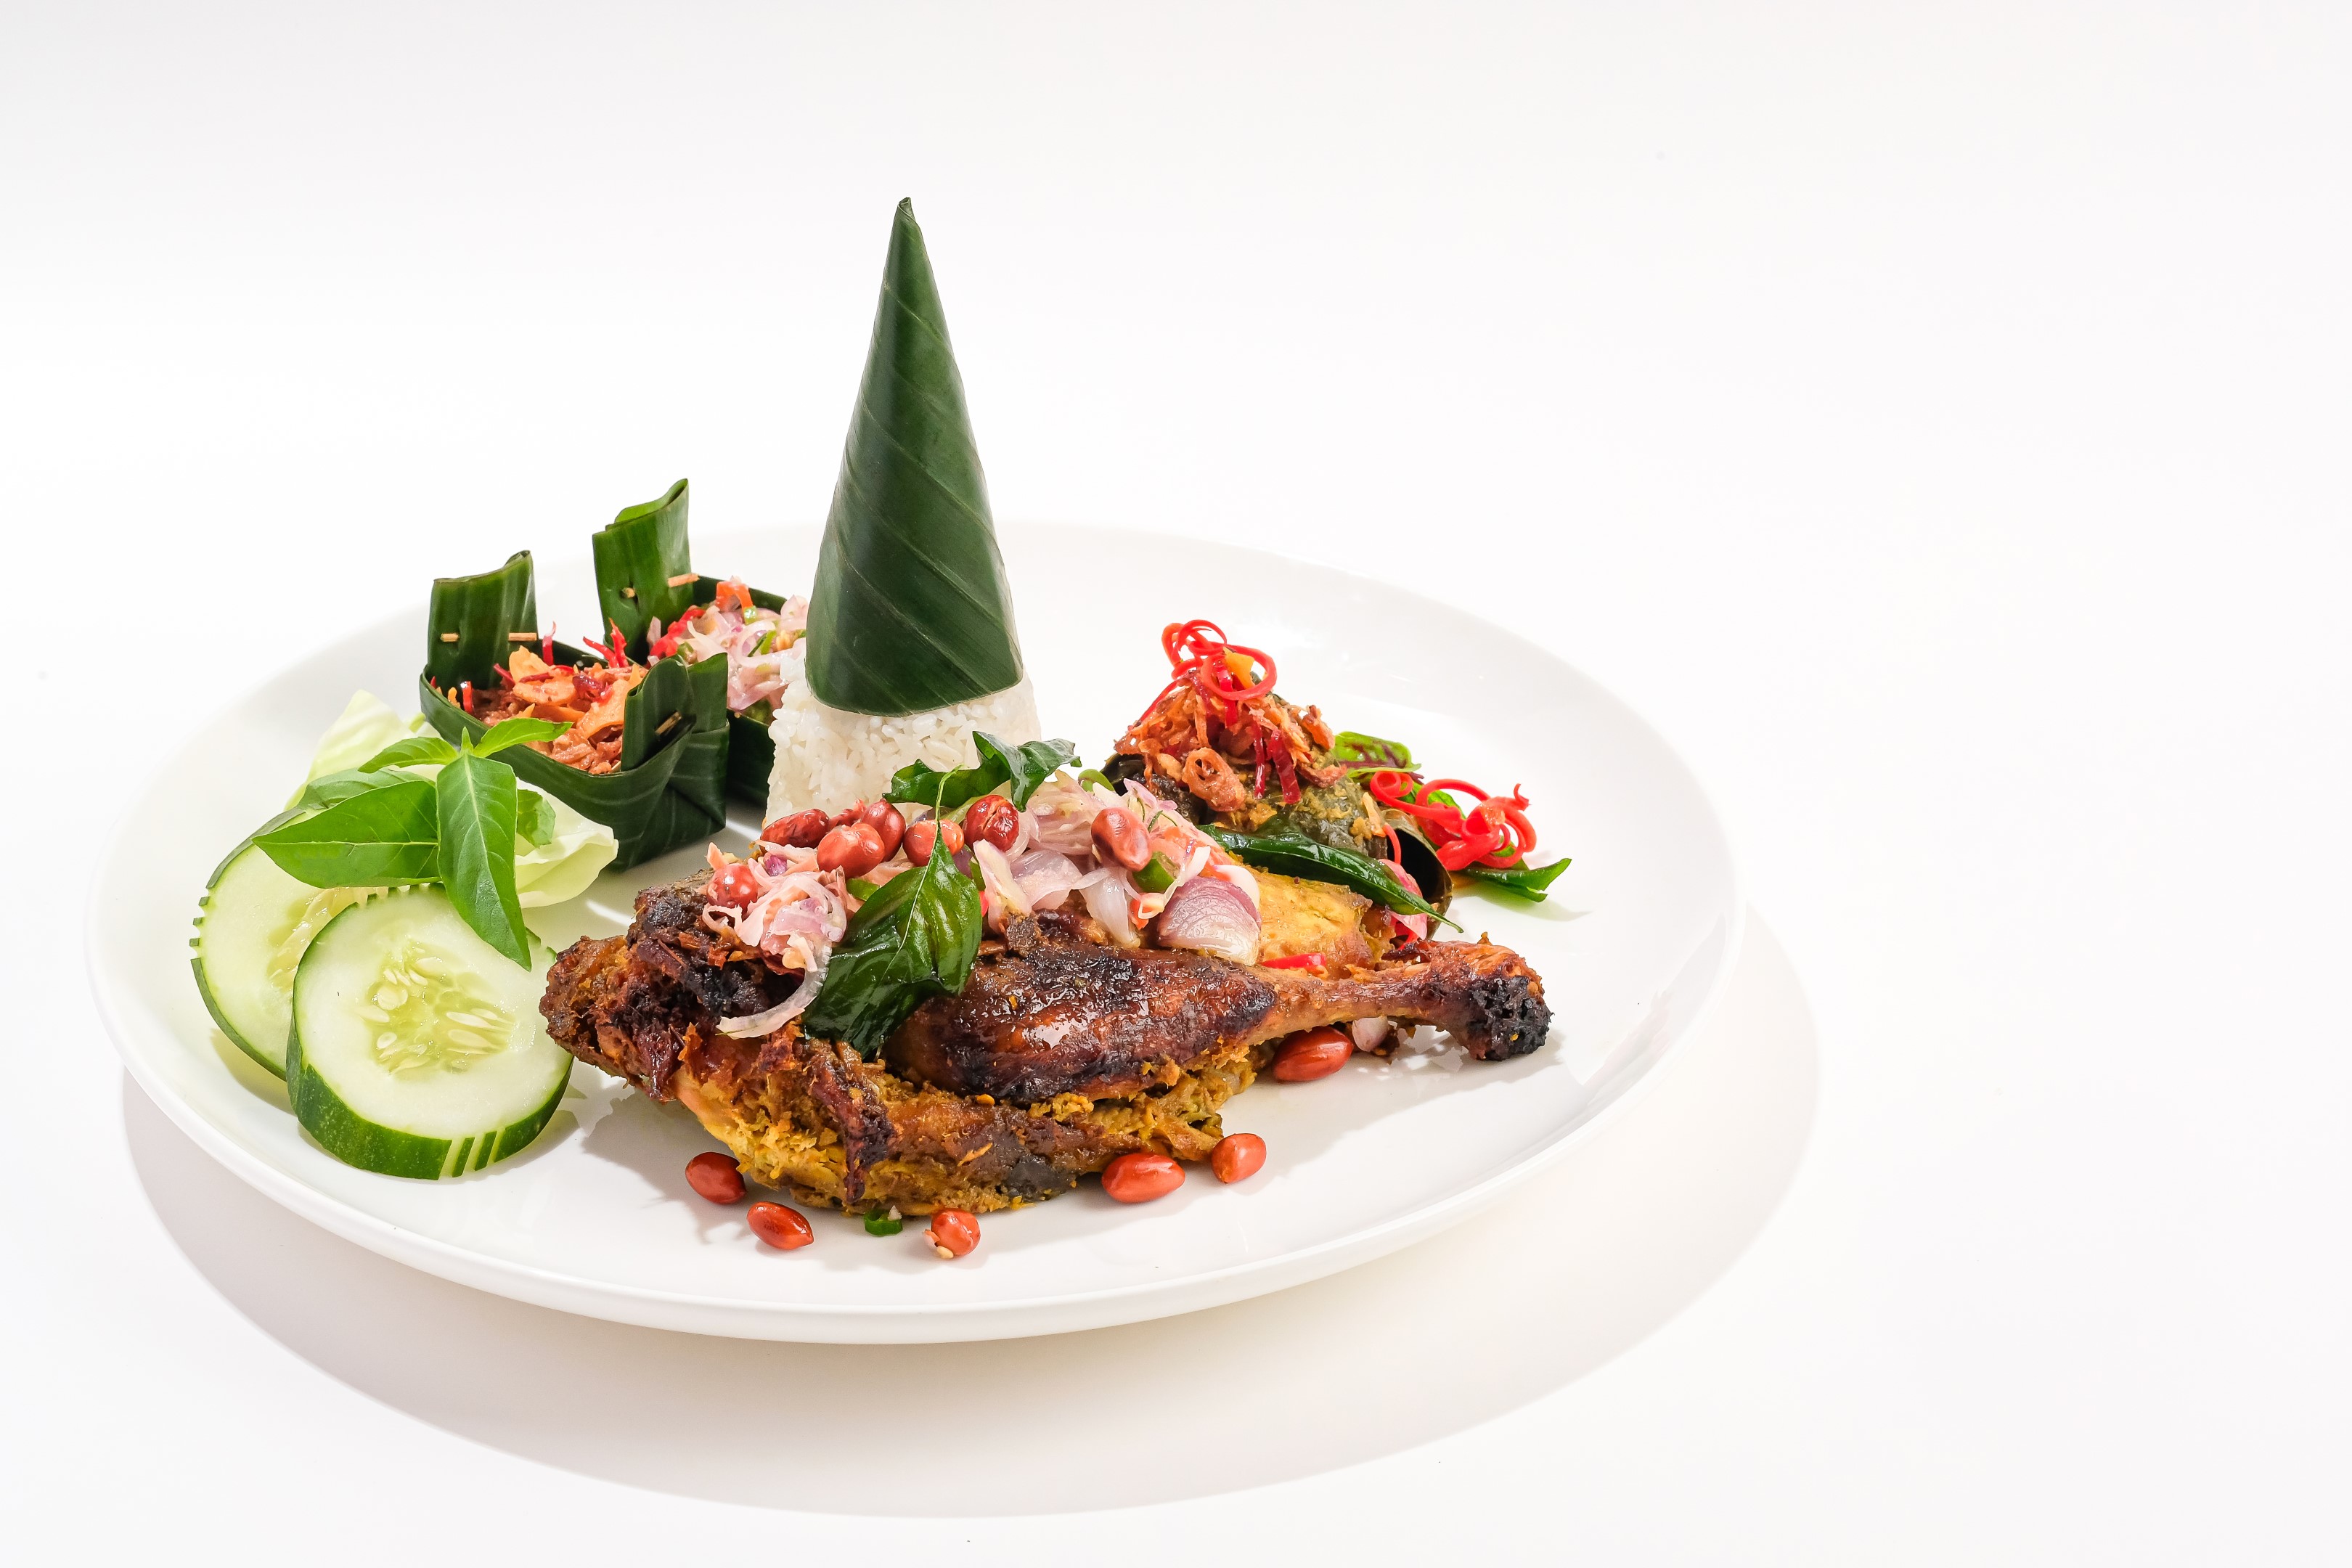 Sofitel Bali Nusa Dua Beach Resort, Experience a Culinary Renaissance at Sofitel Bali Nusa Dua Resort